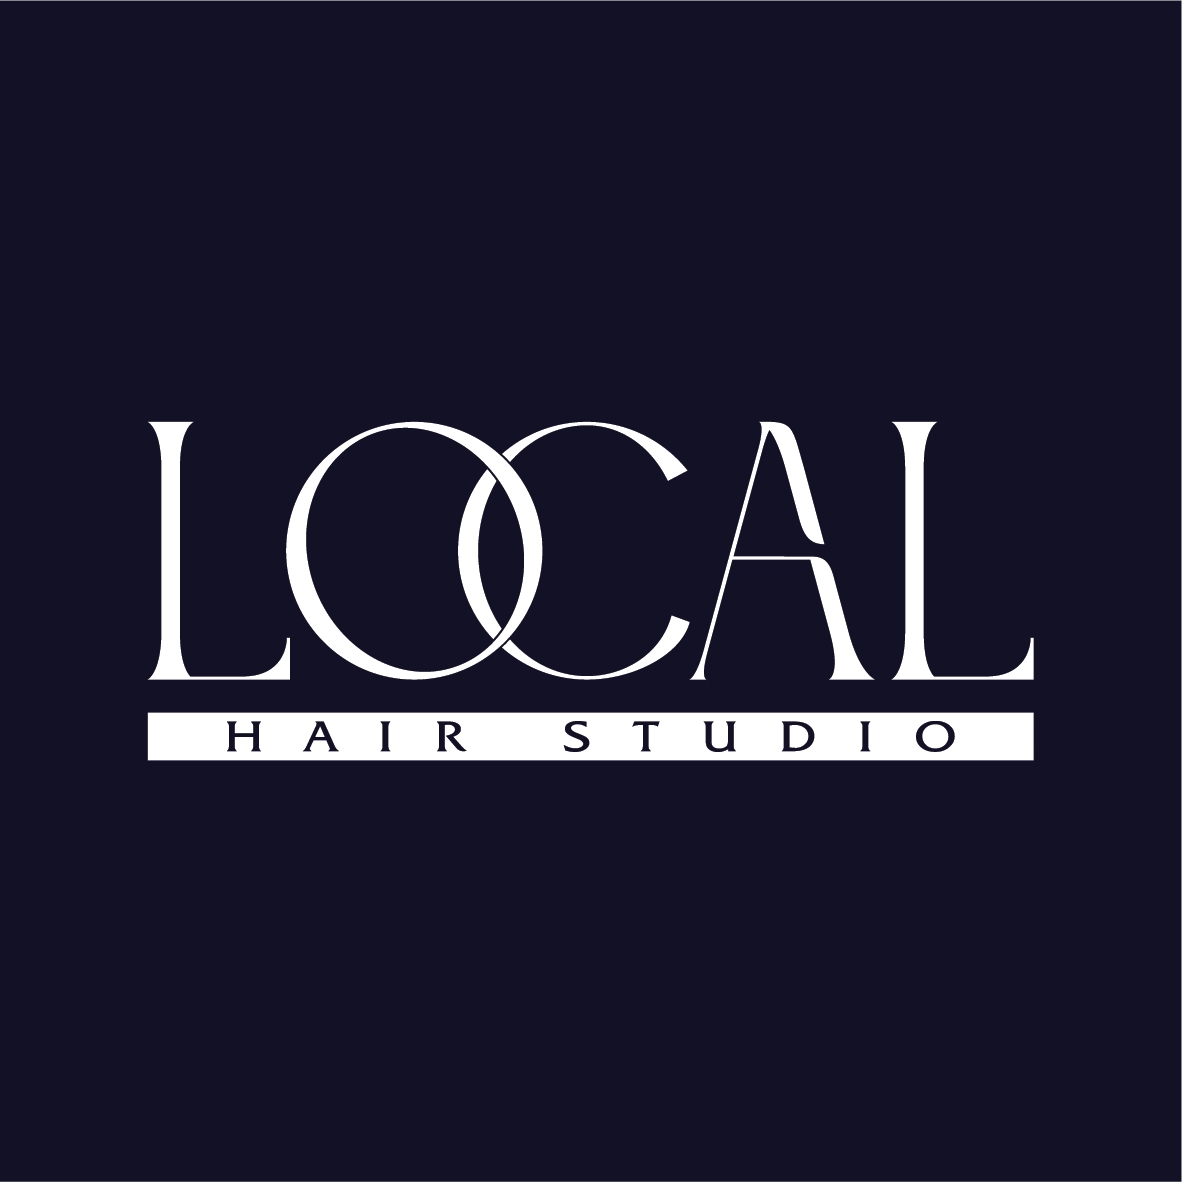 Local Hair Studio Logo